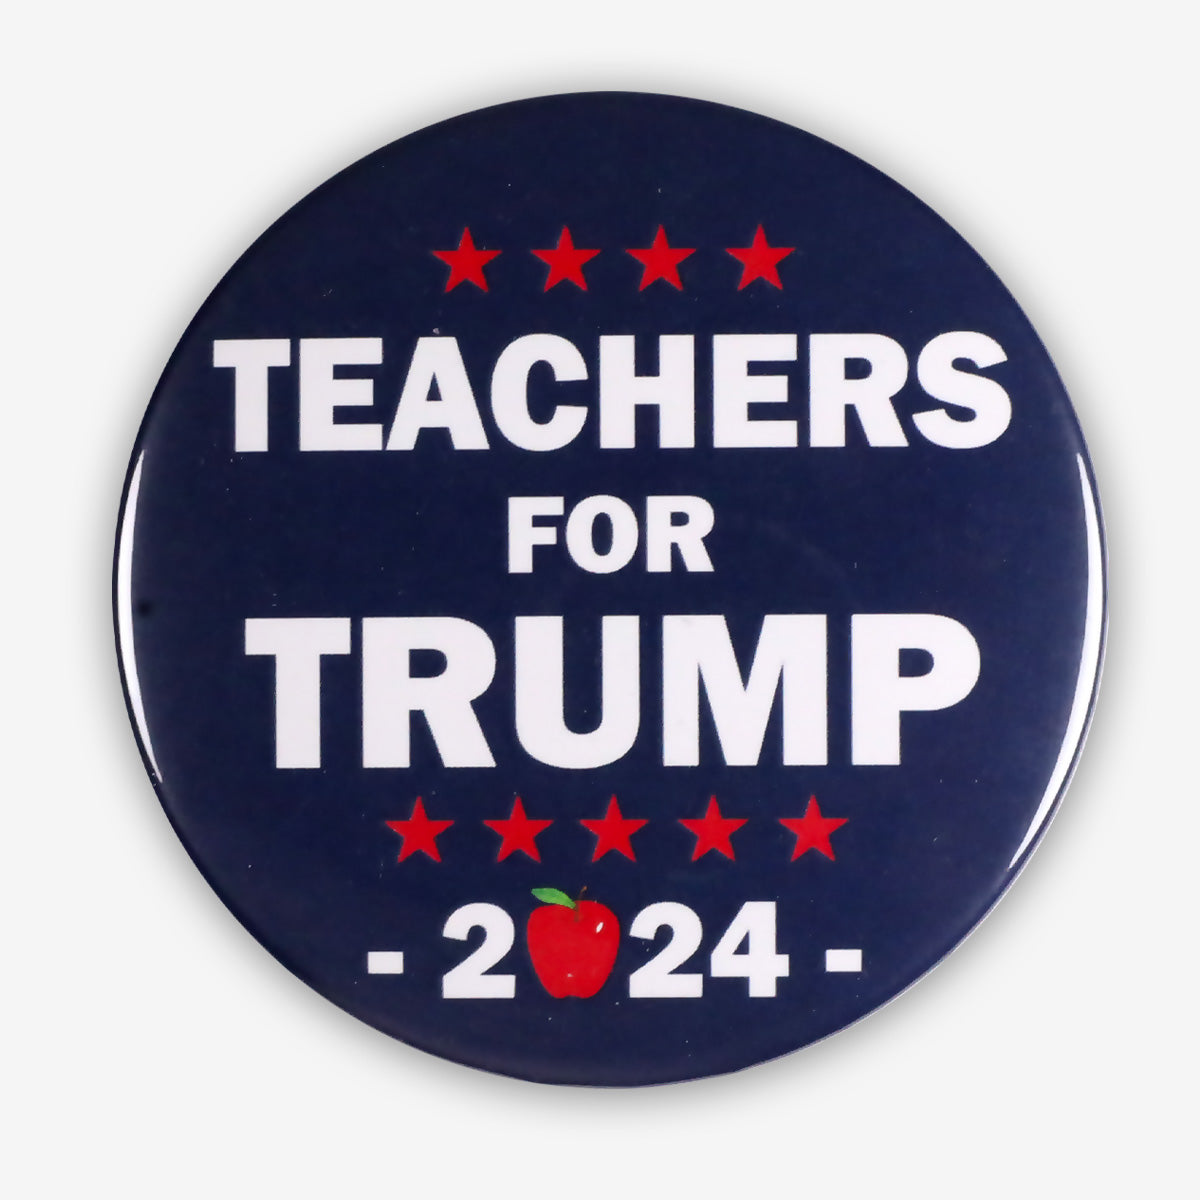 Trump 2024 Button - Teachers for Trump